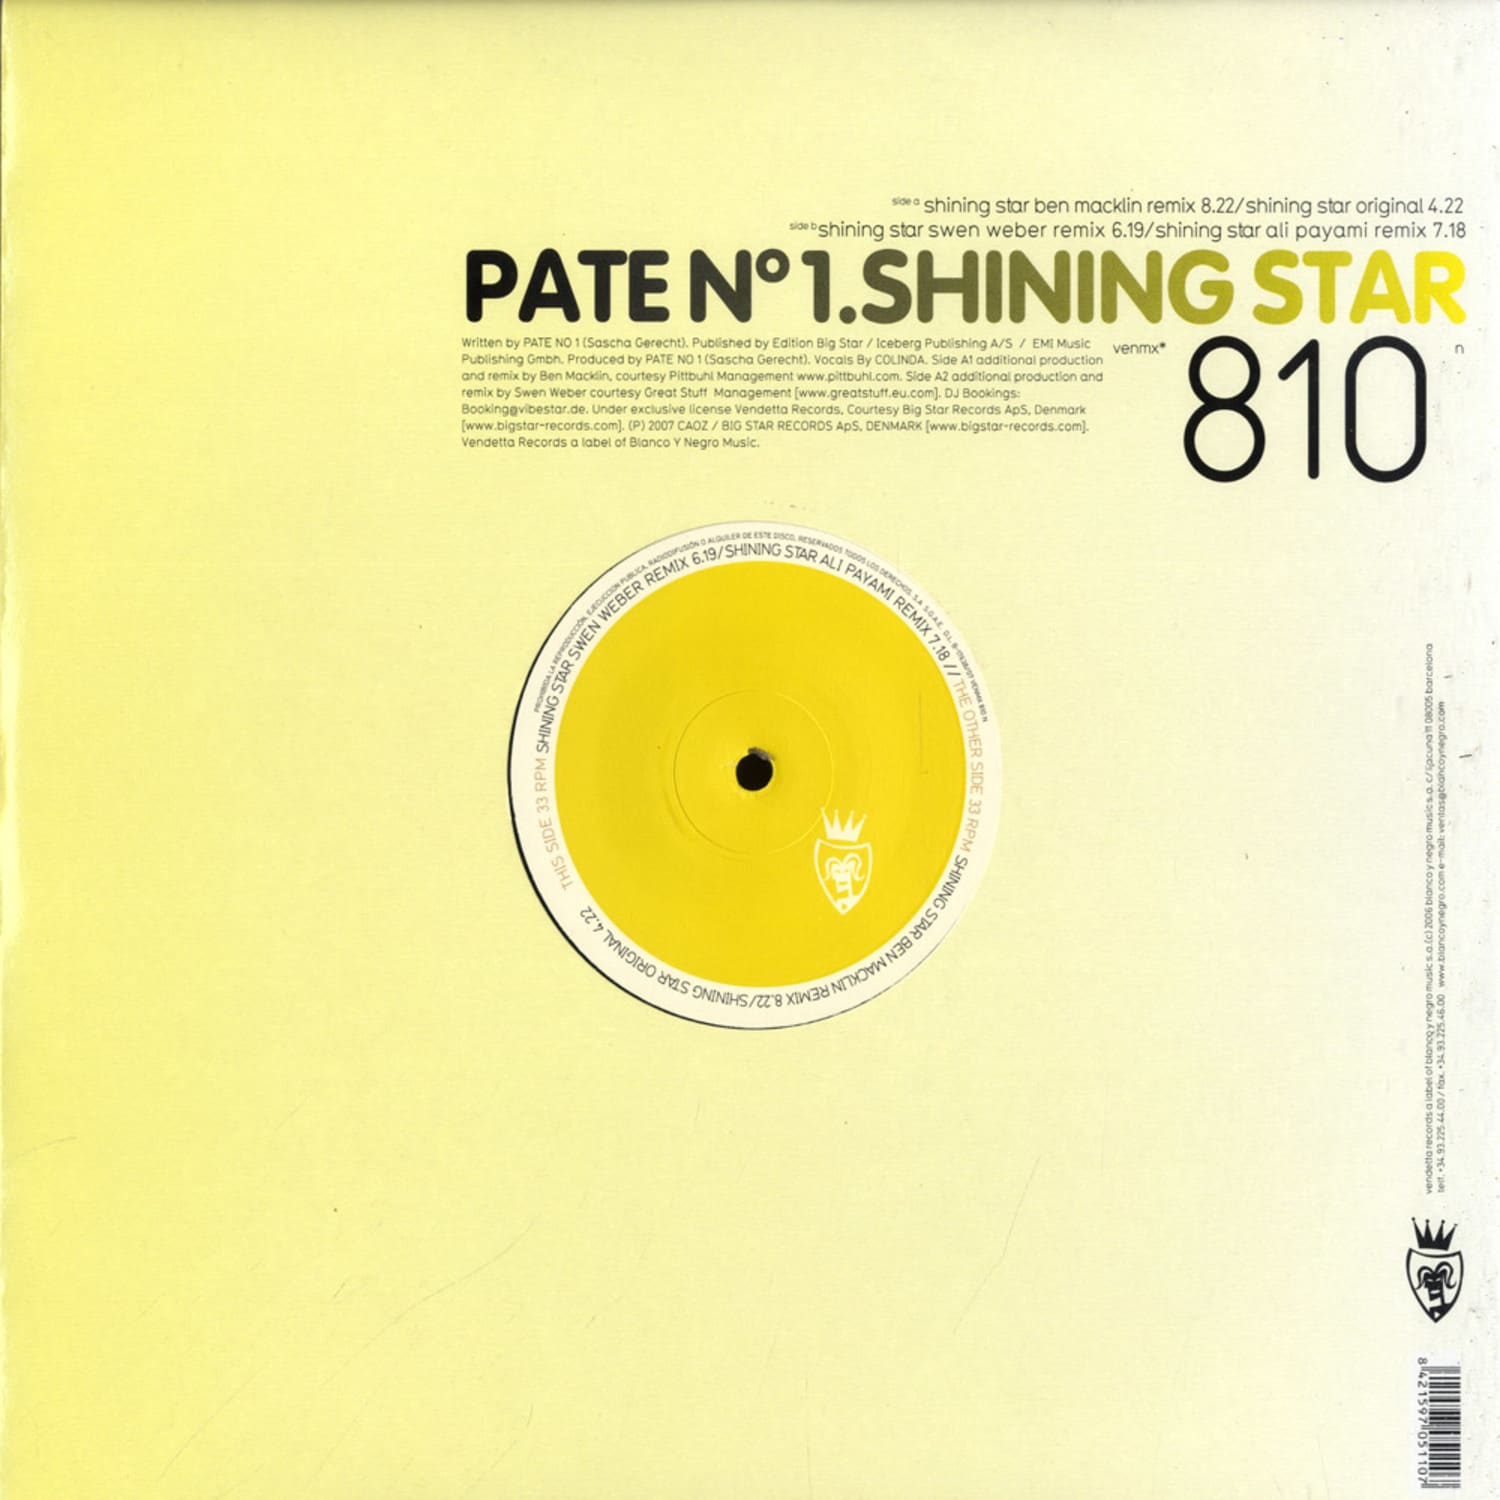 Pate No.1 - SHINING STAR 